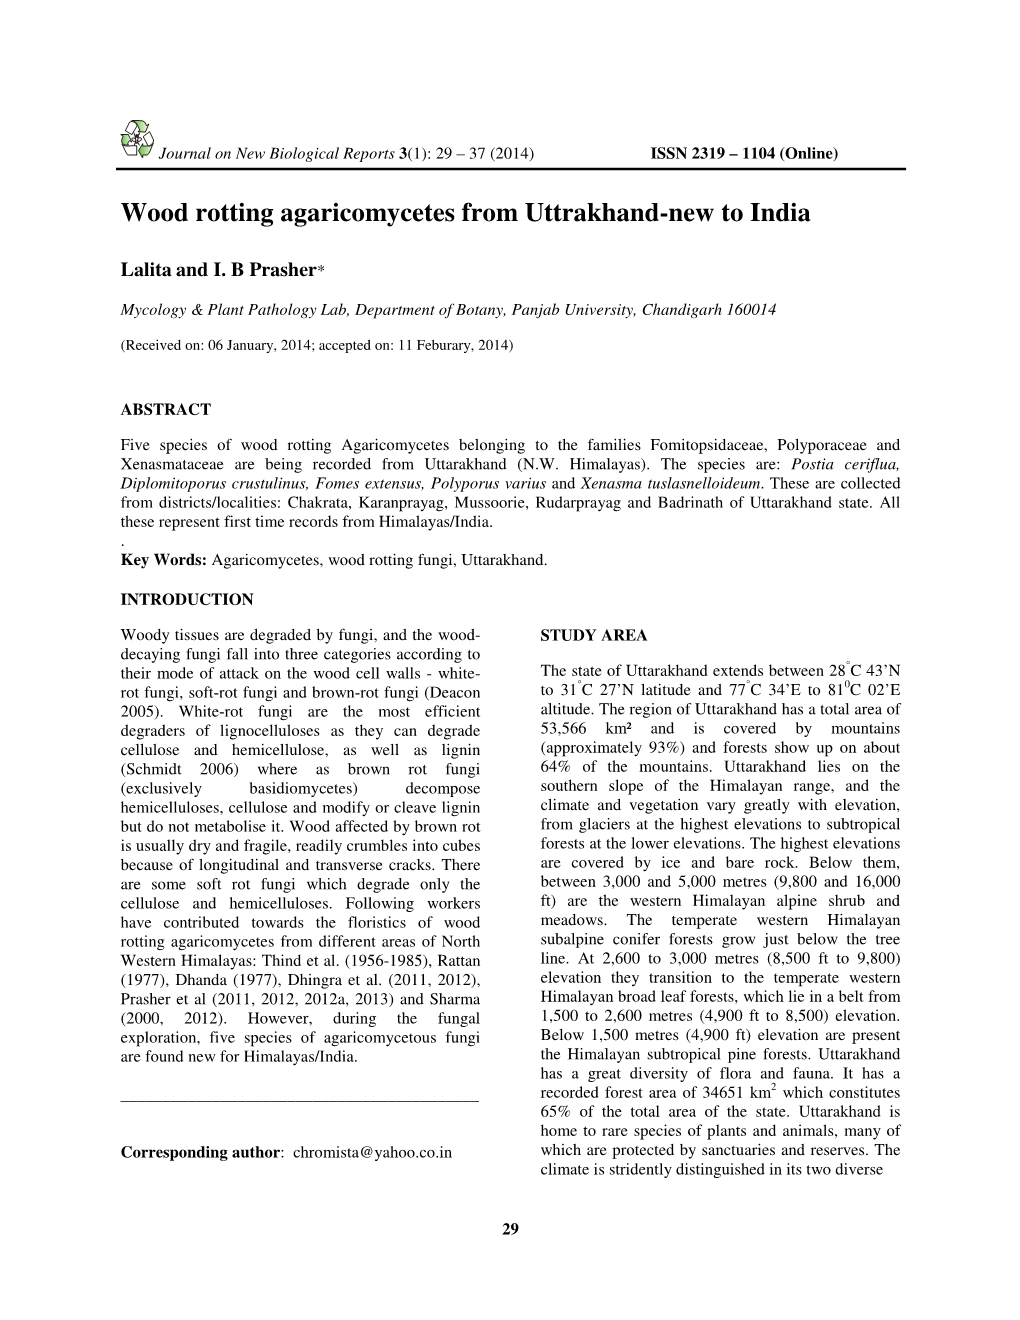 Wood Rotting Agaricomycetes from Uttrakhand-New to India